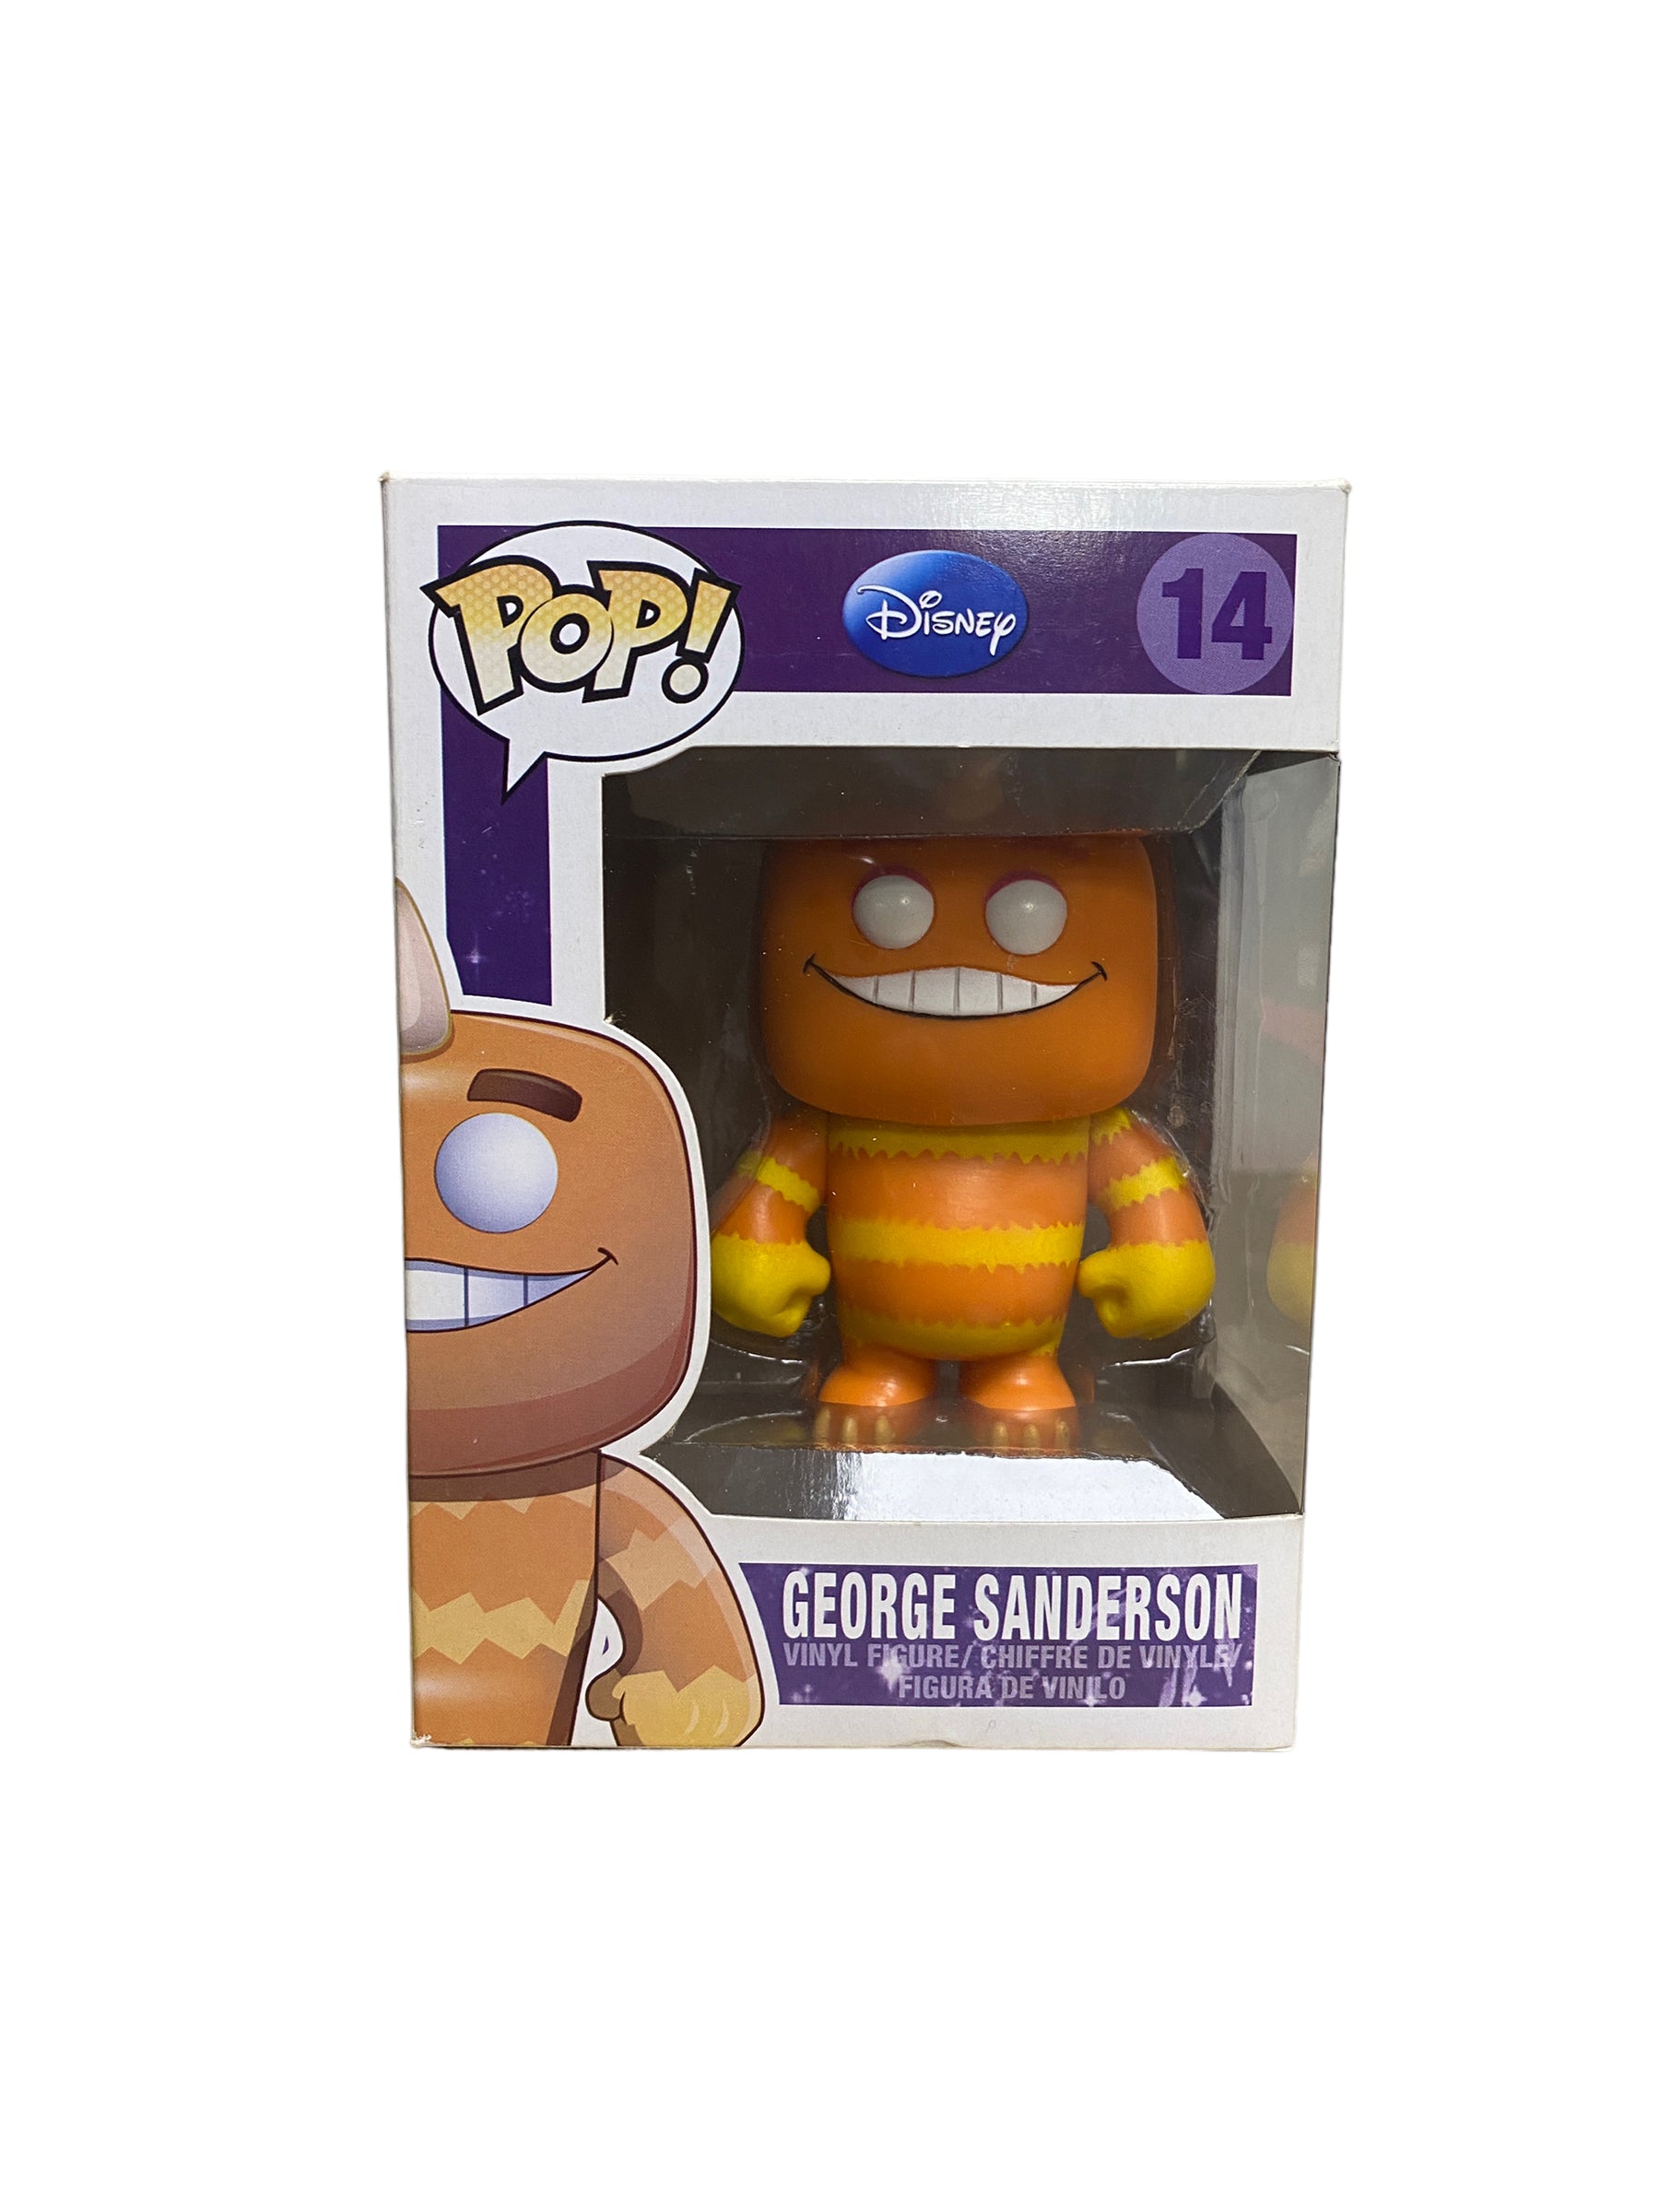 George Sanderson #14 Funko Pop! - Disney Series 2 - 2012 Pop! - Condition 7/10